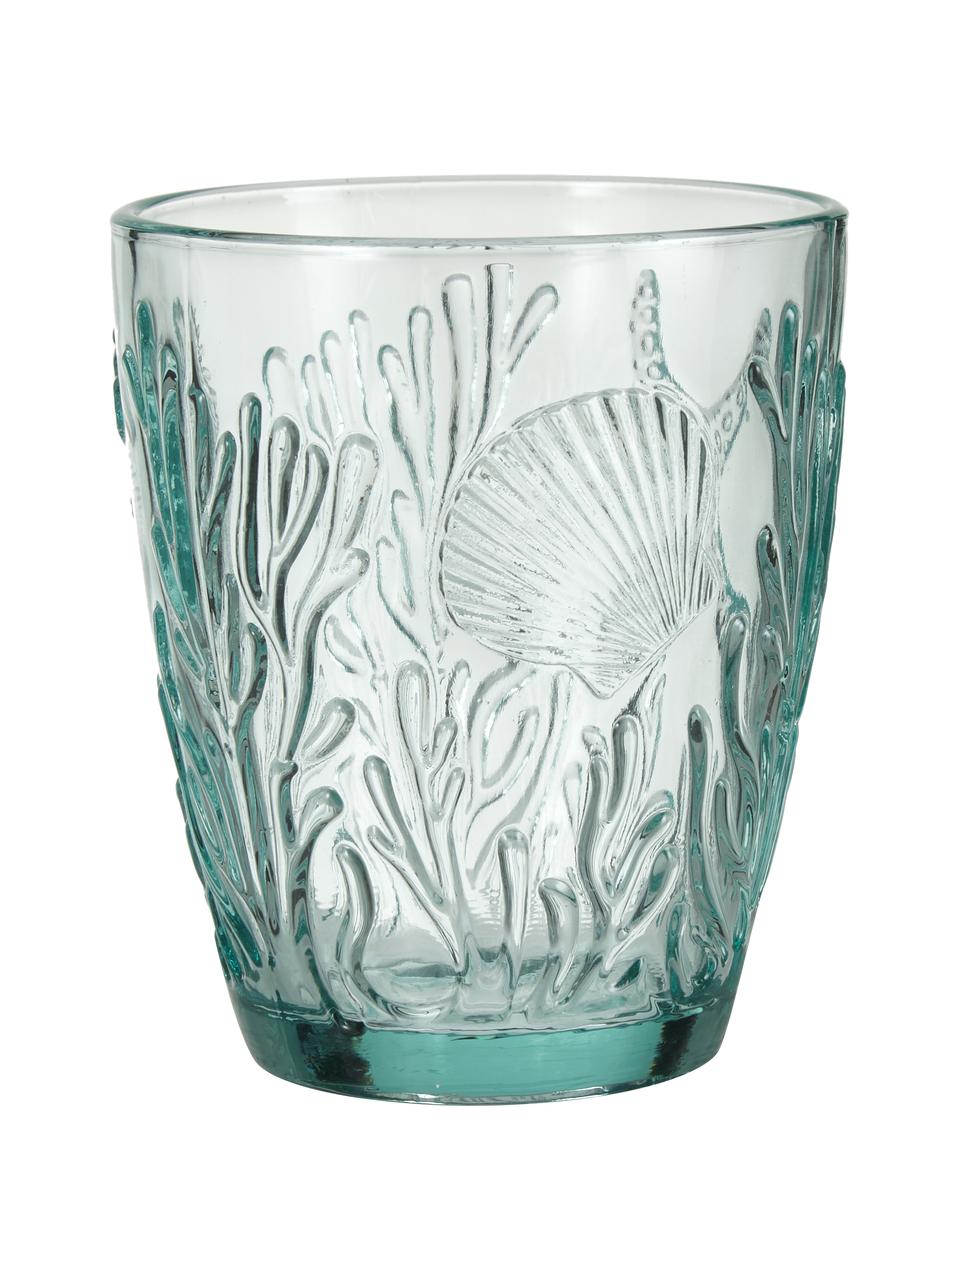 Sada sklenic Pantelleria s motivem korálů, 6 dílů, Sklo, Odstíny modré, Ø 9 cm, V 10 cm